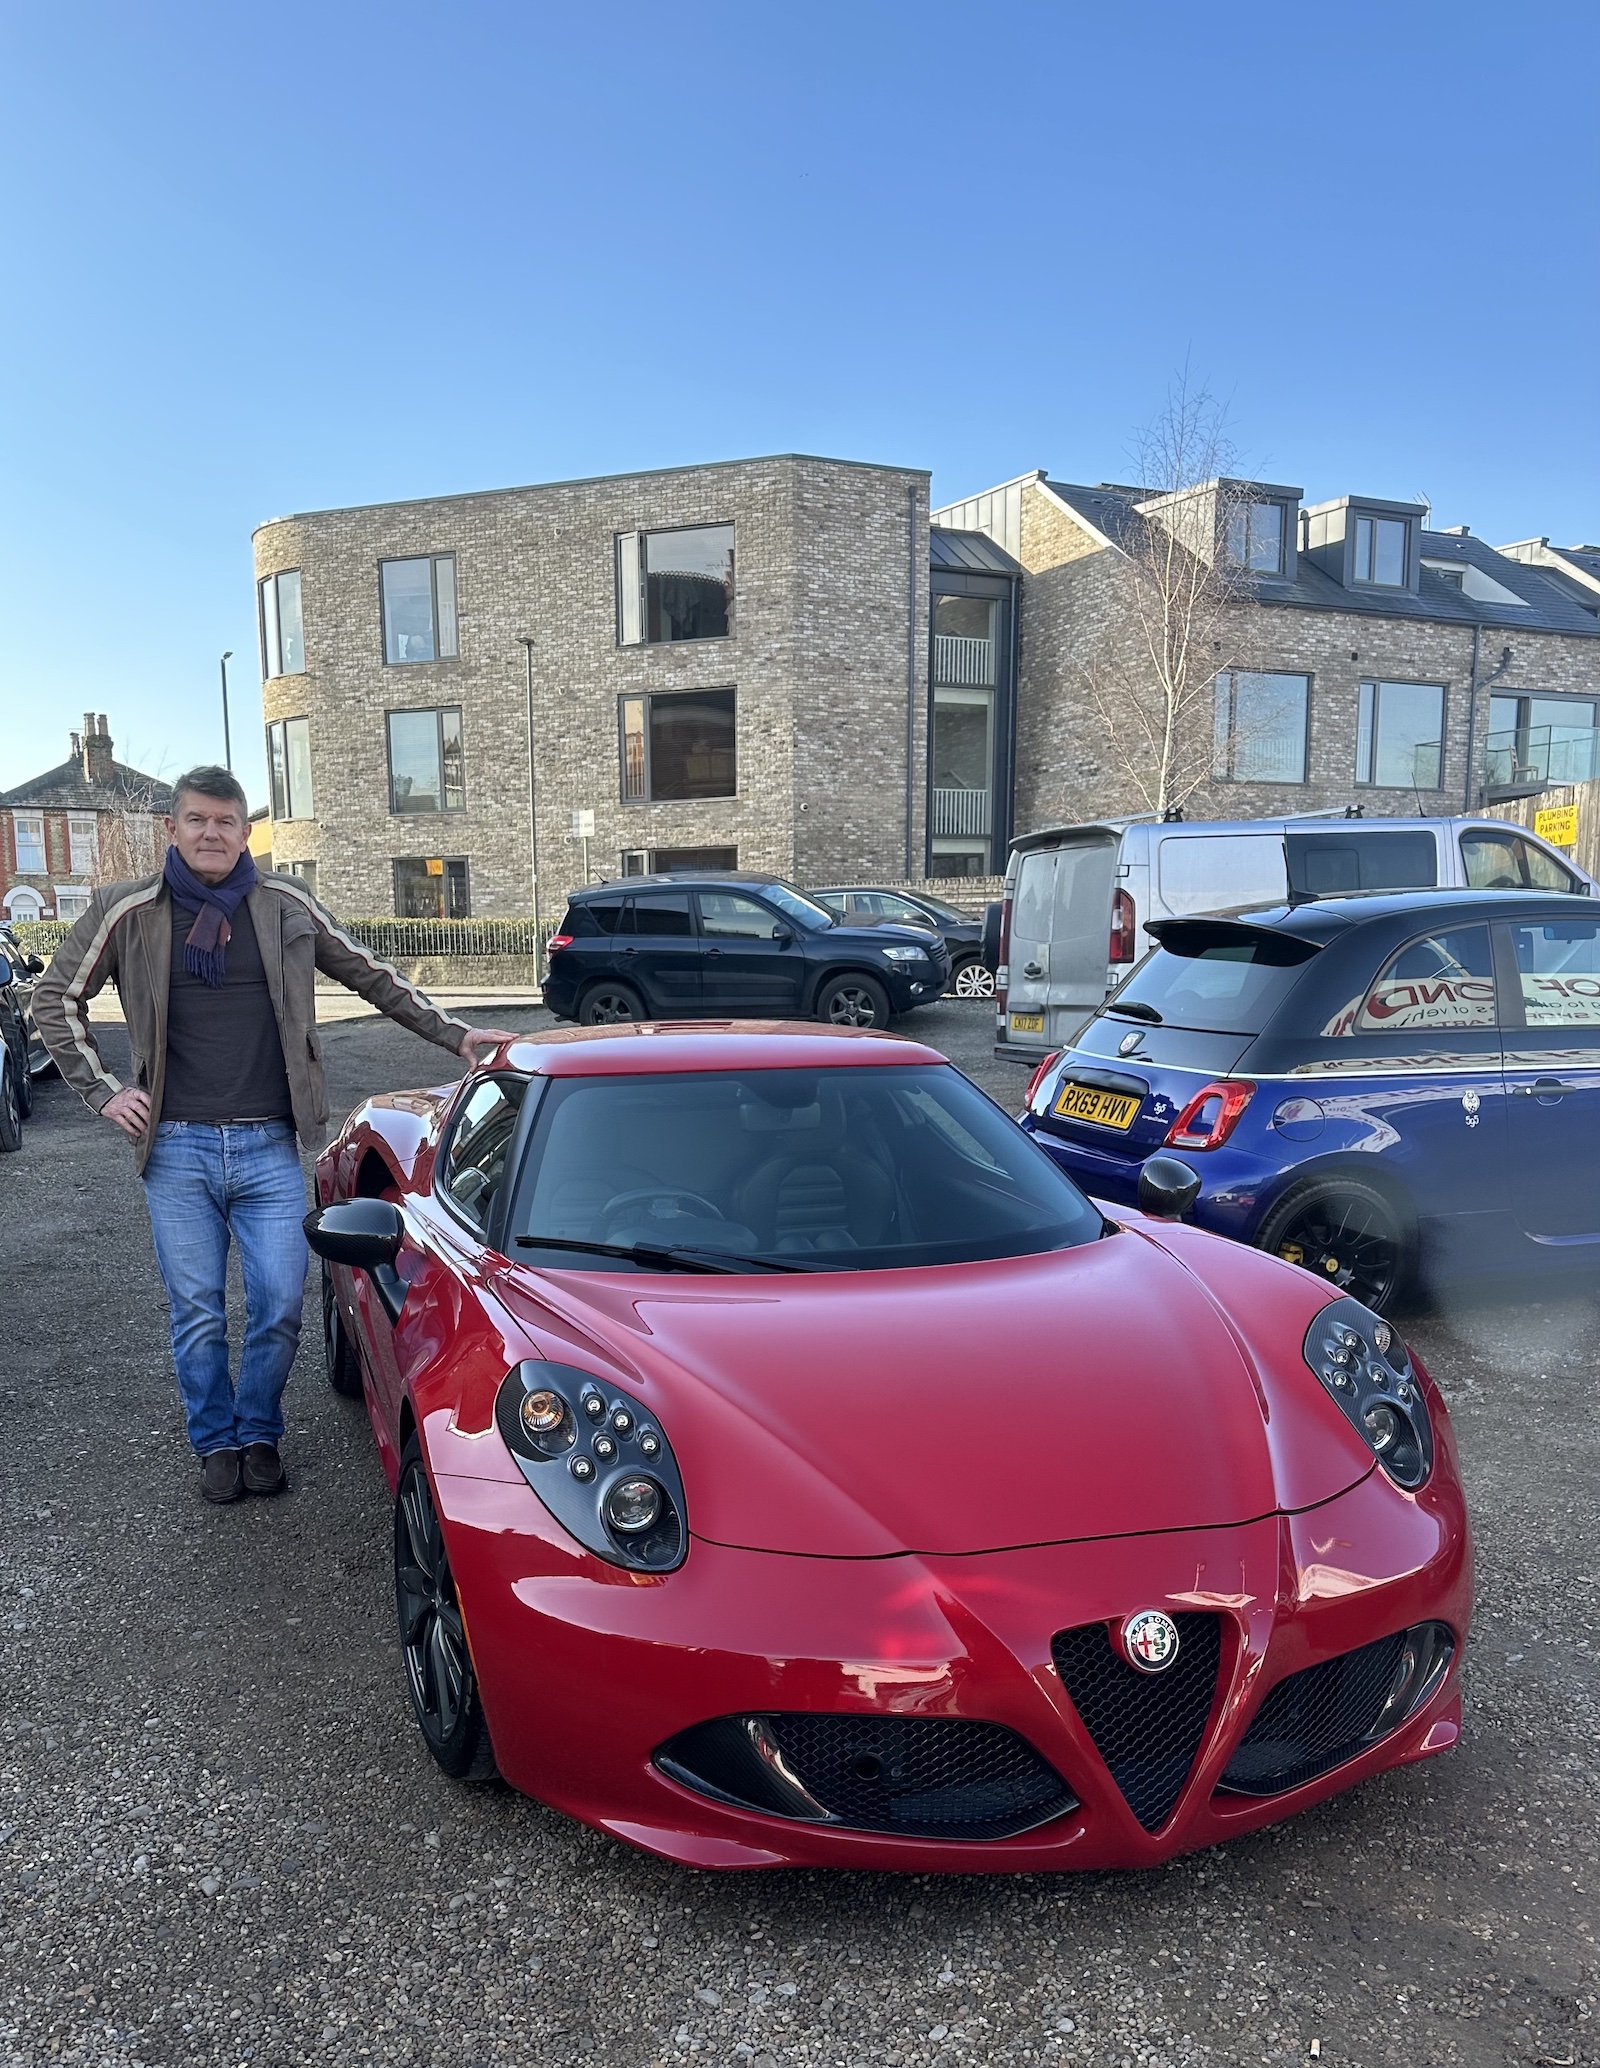 4C reunited with Alfa Romeo